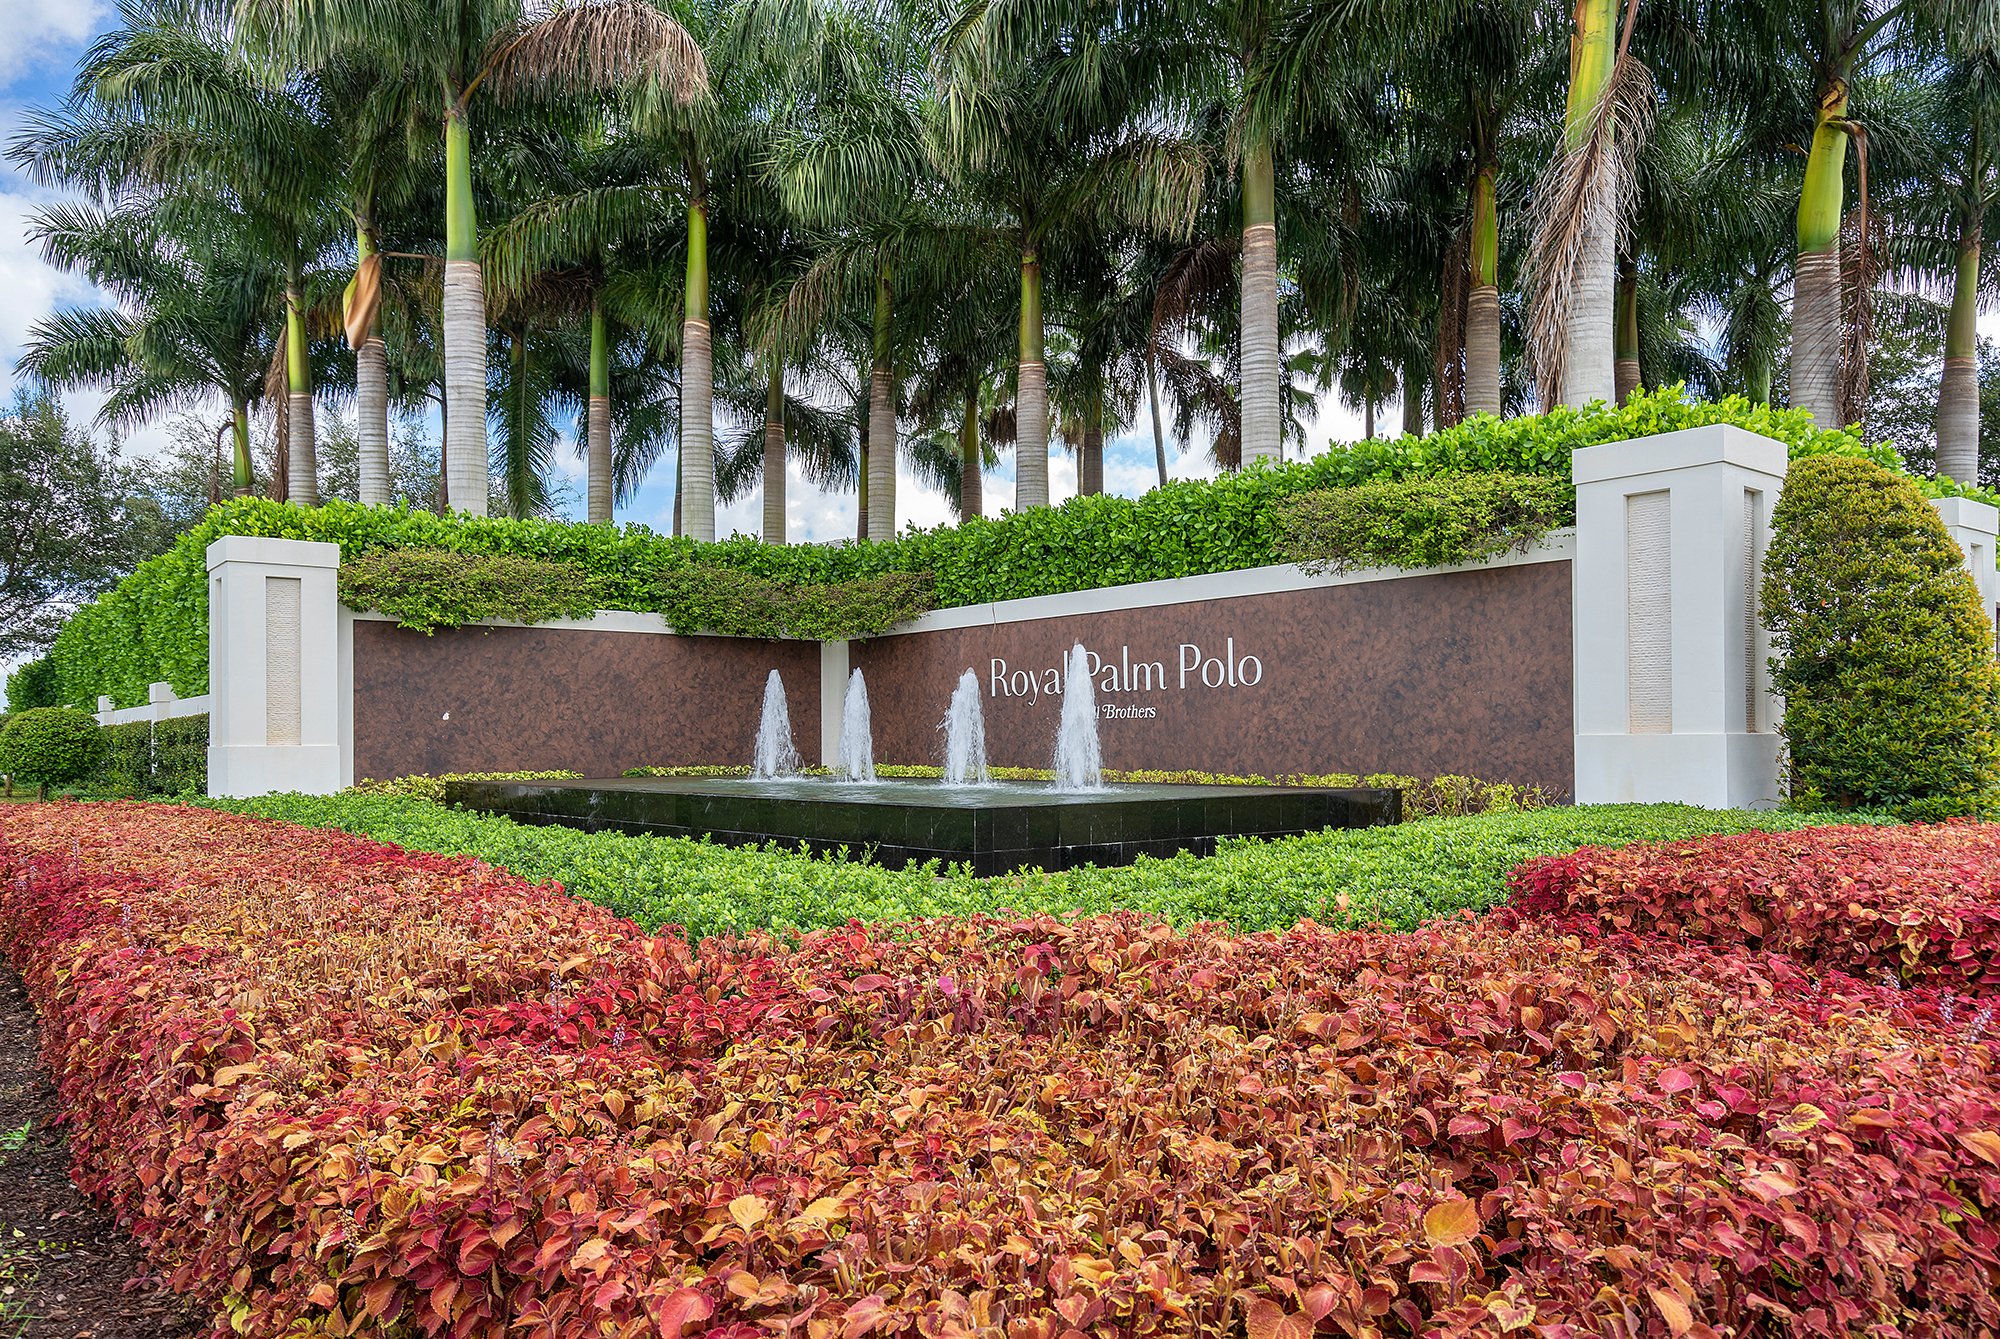 Royal Palm Polo Boca Raton Signage